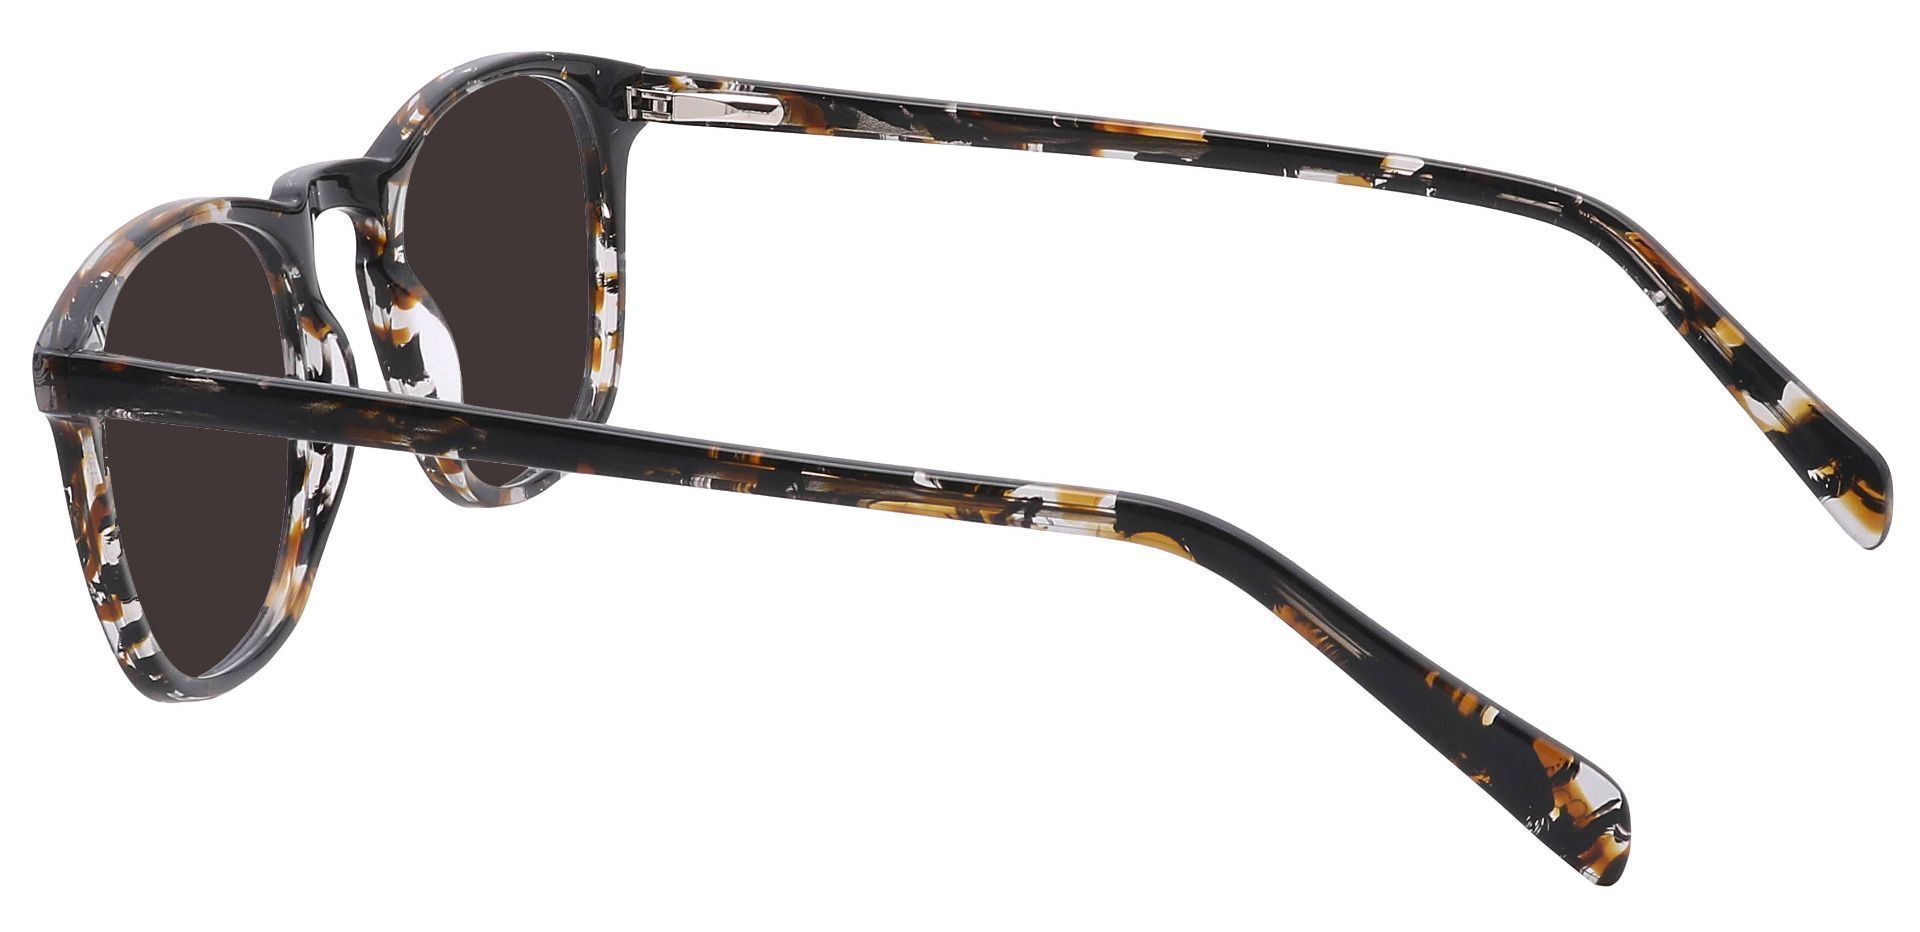 Venti Square Reading Sunglasses - Black Frame With Gray Lenses